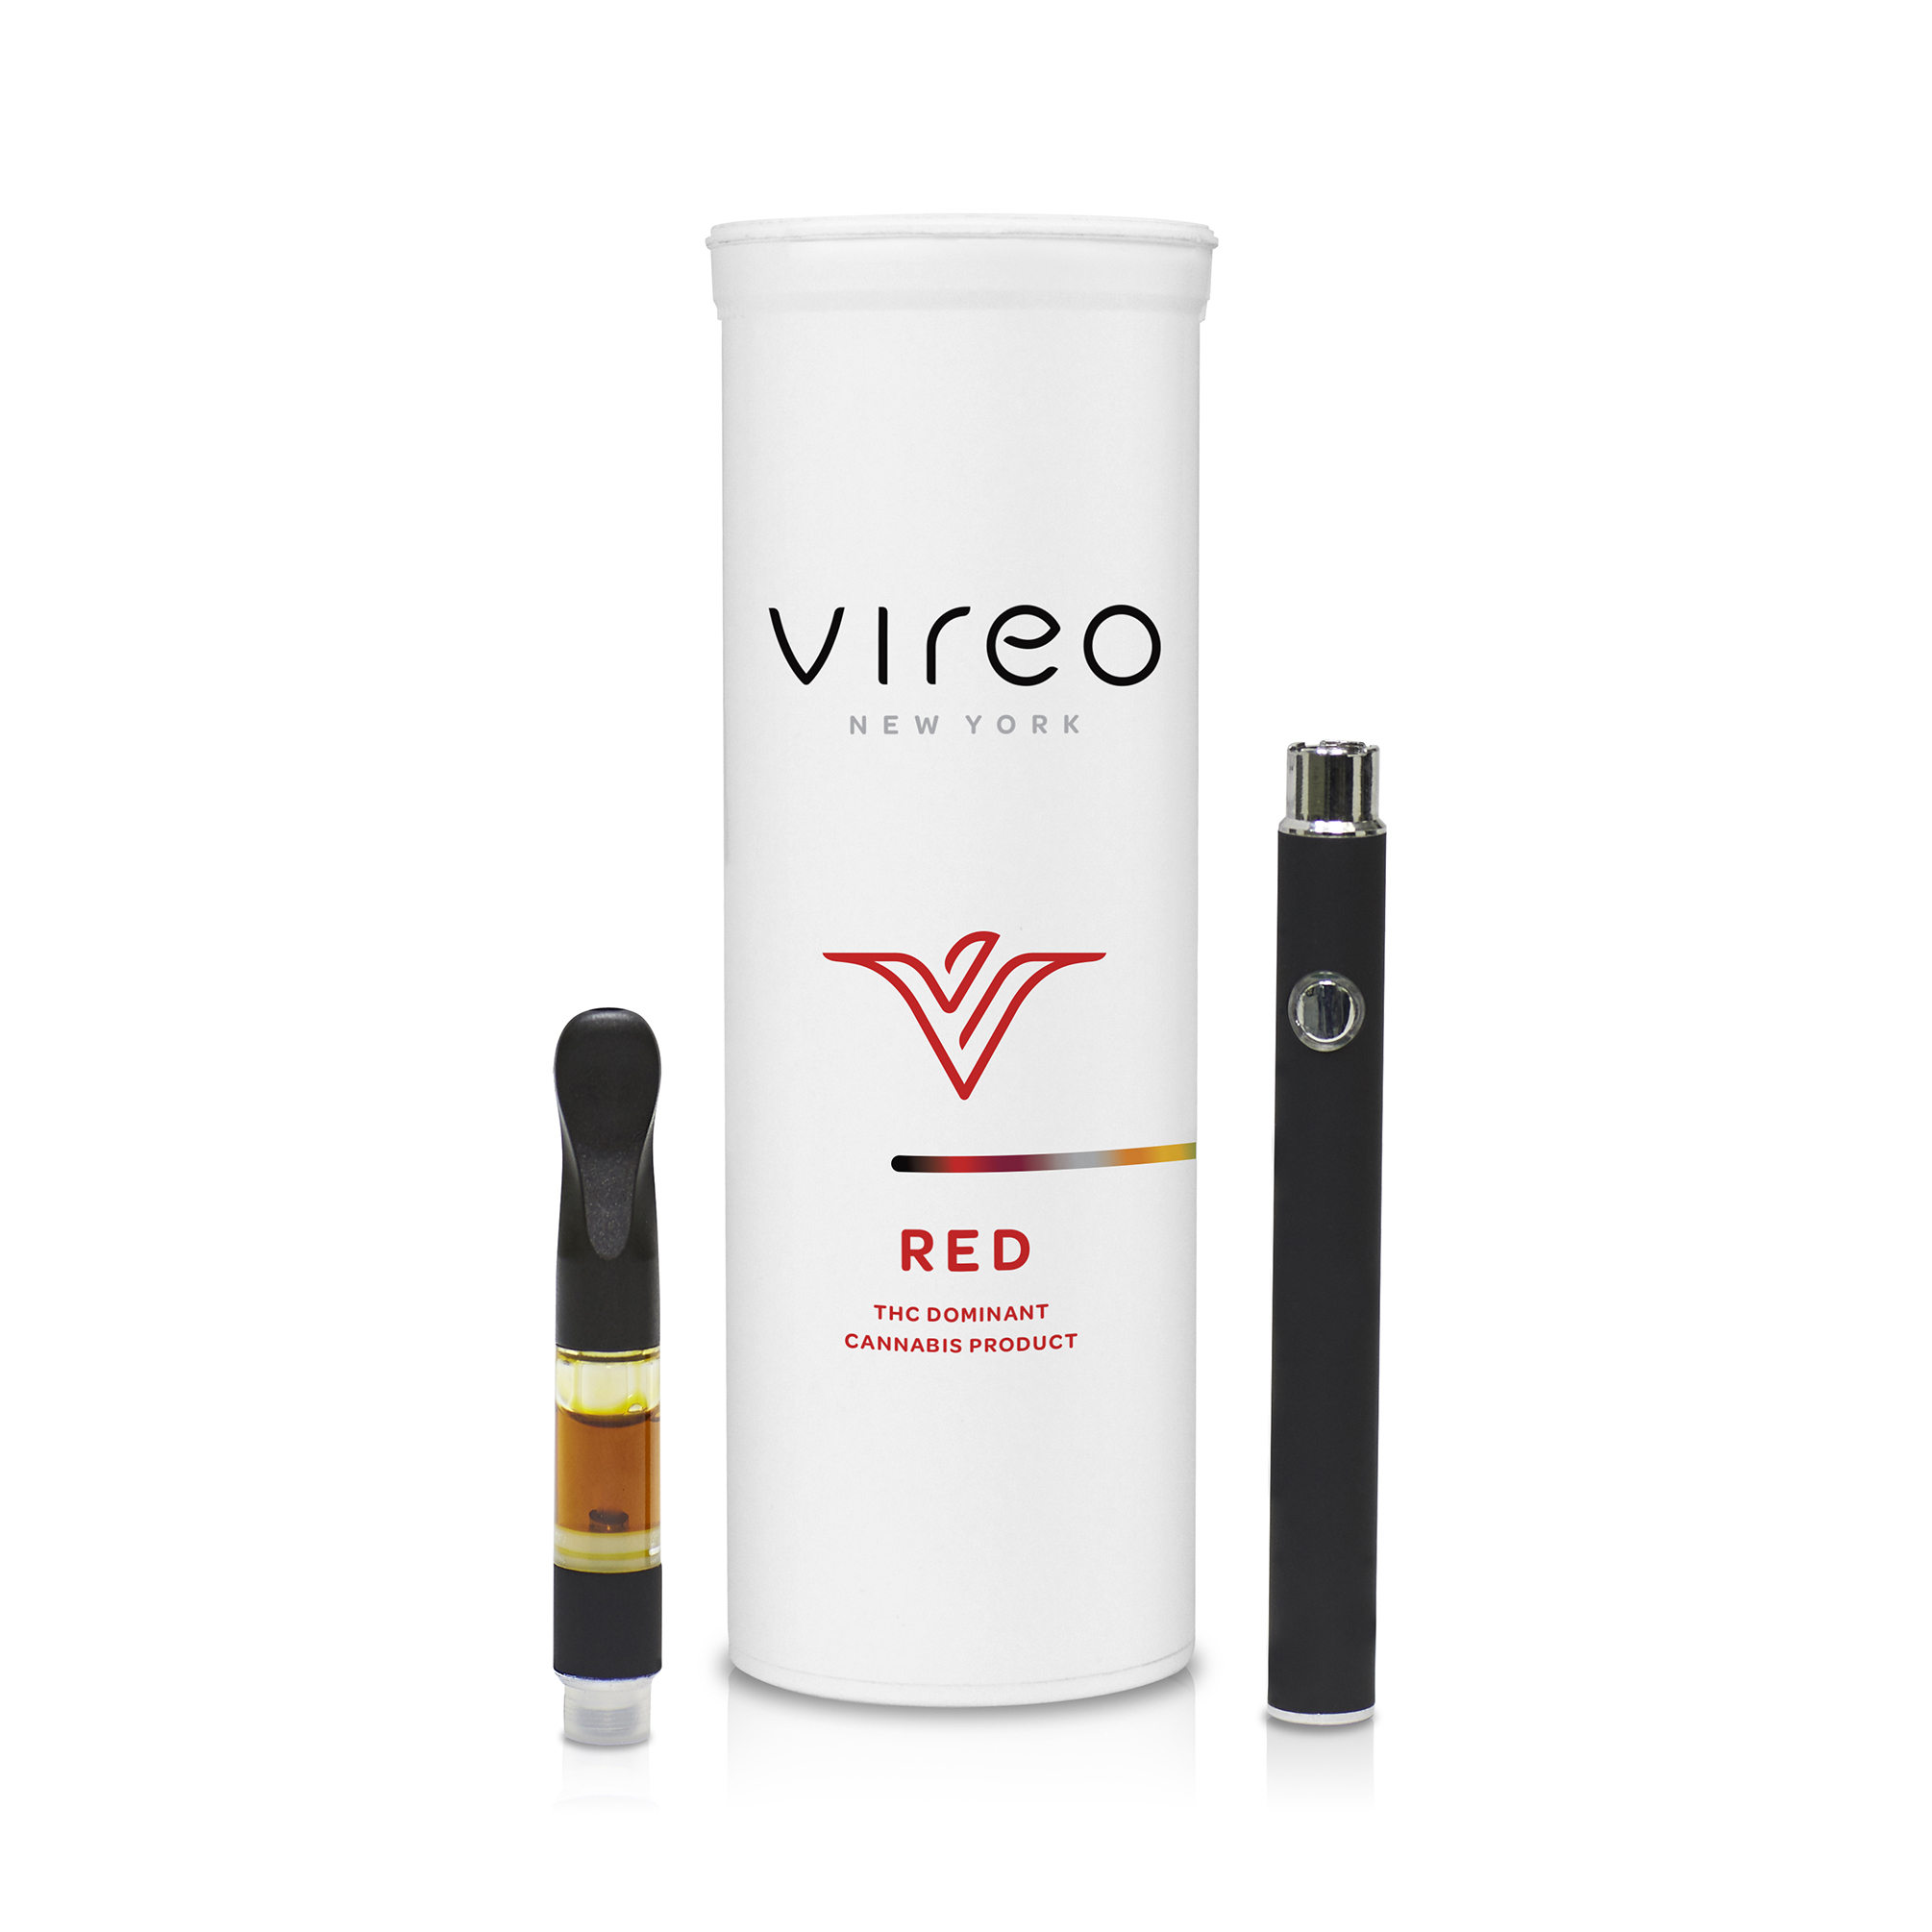 Vireo Red Prefilled Vaporizer Cartridge - 0.5 mL Cartridge ...